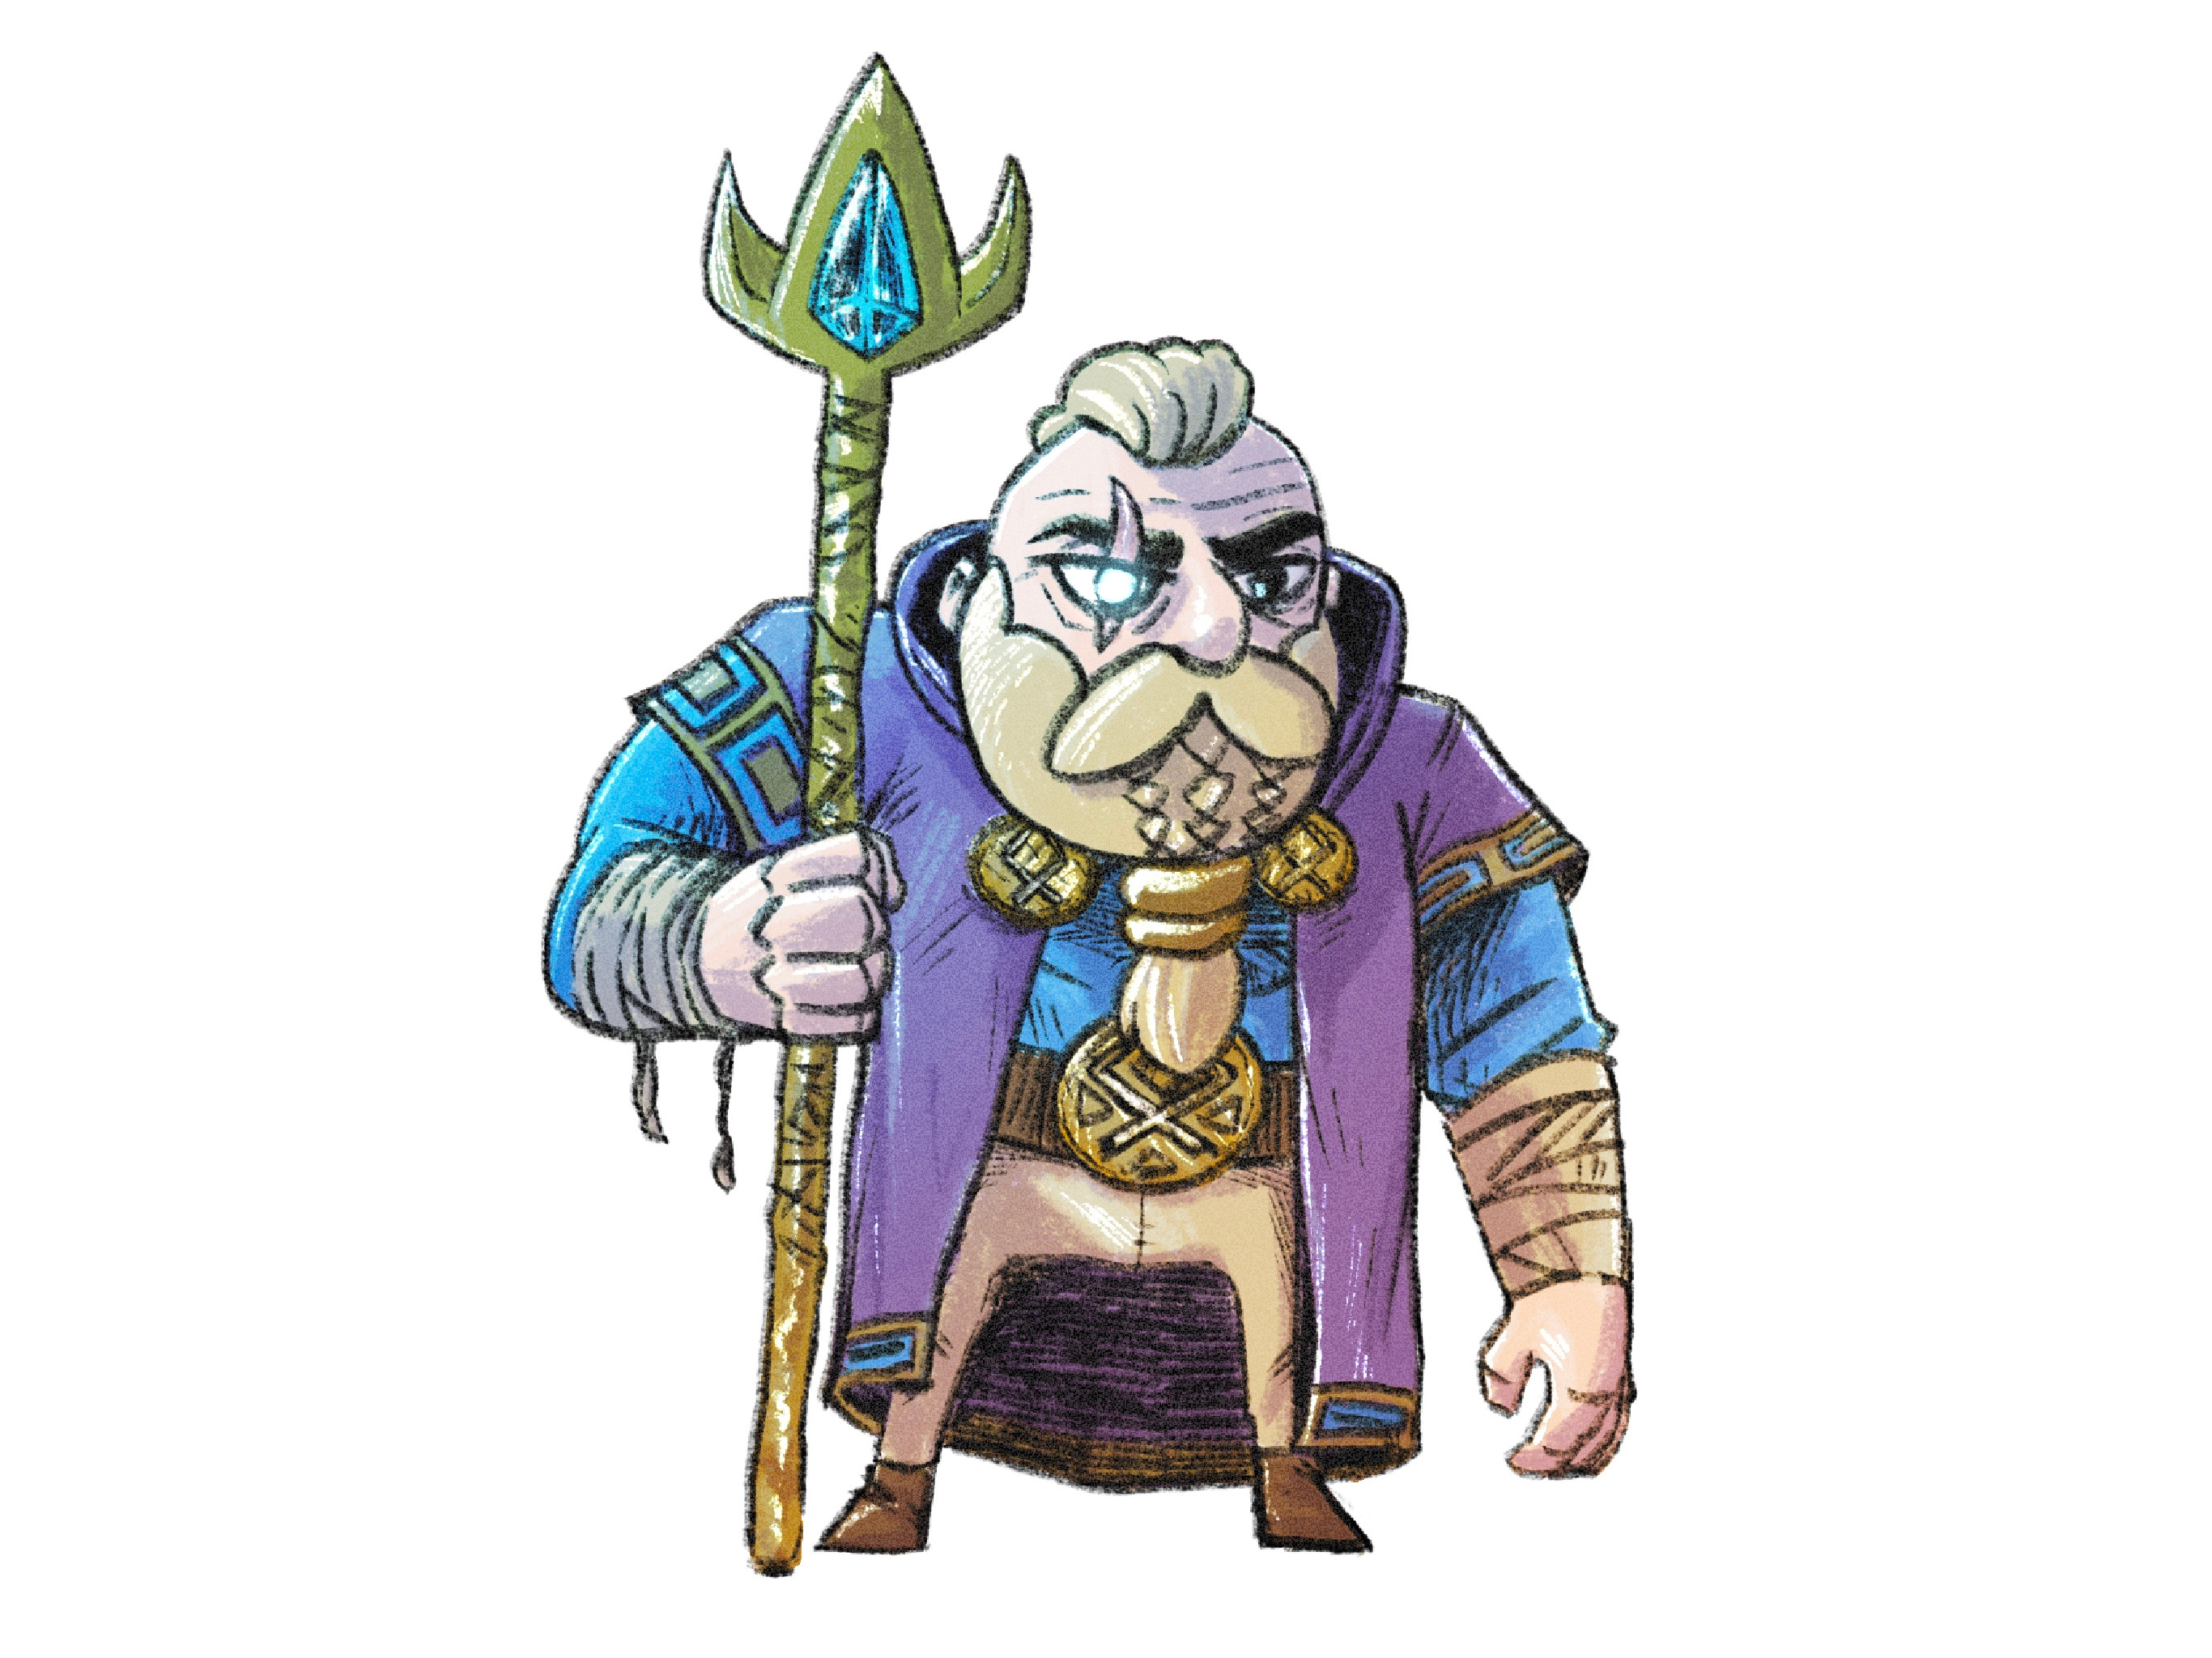 Odinn and his legendary spear, Gungnir.